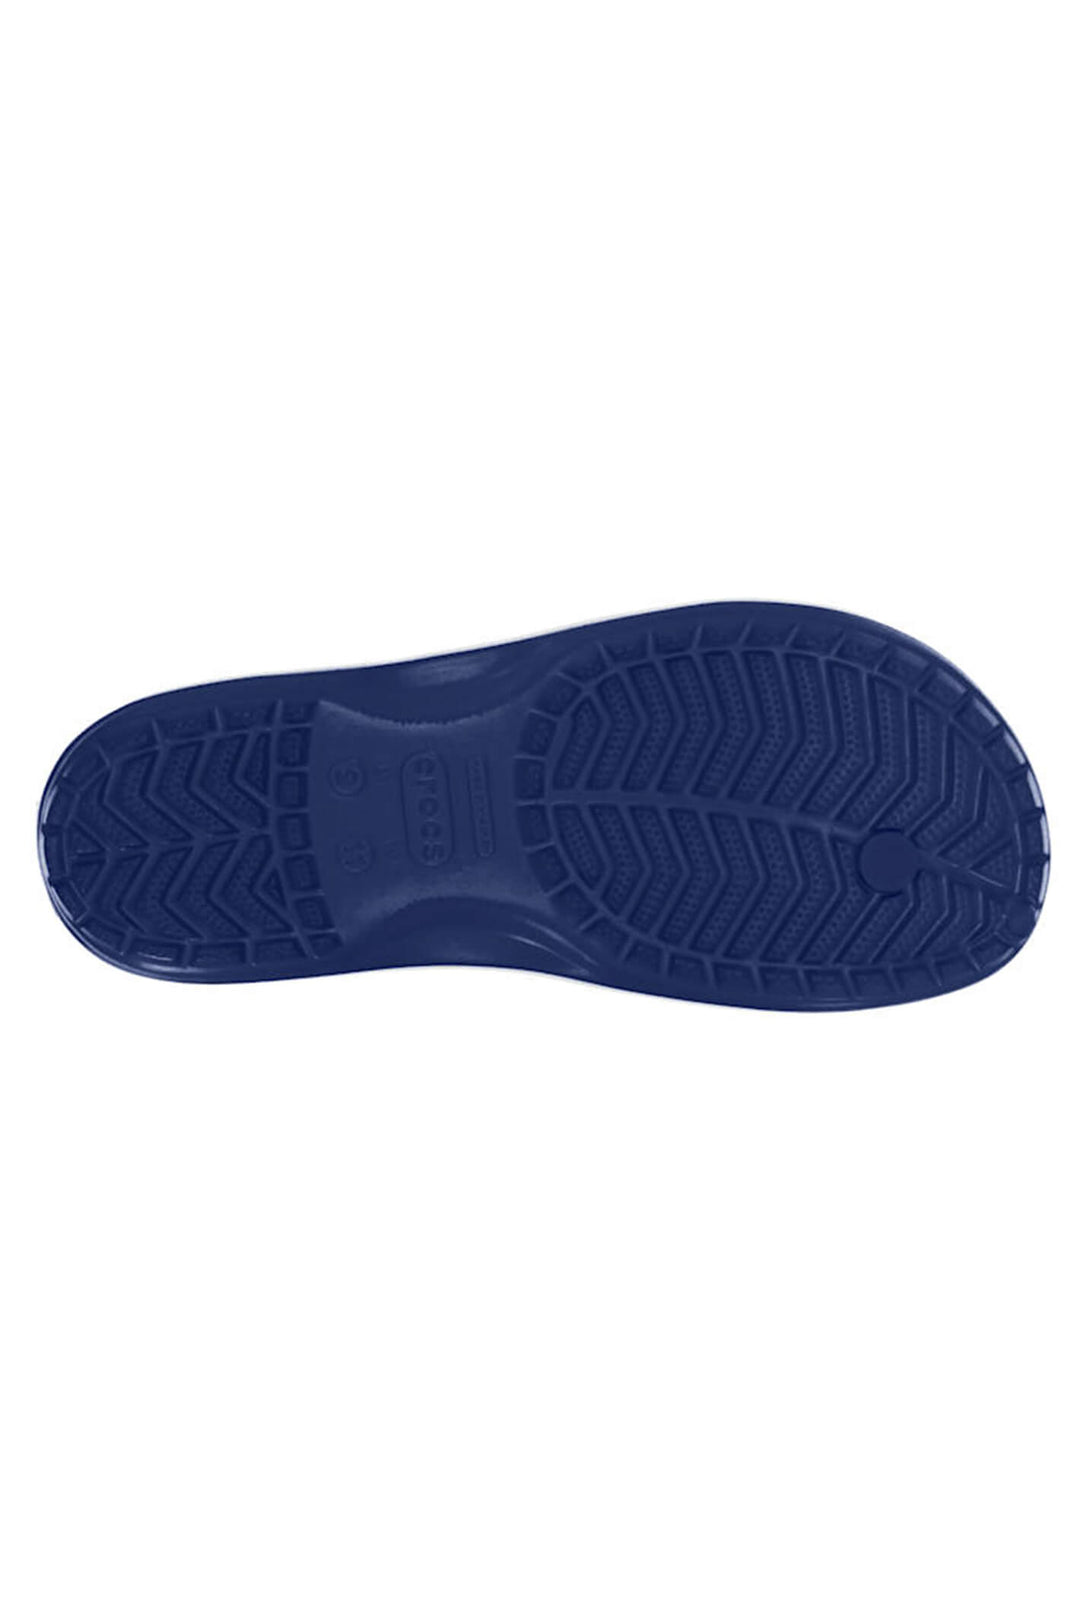 Crocs Crocband Flip 11033 Navy Sandal - Shirley Allum Boutique